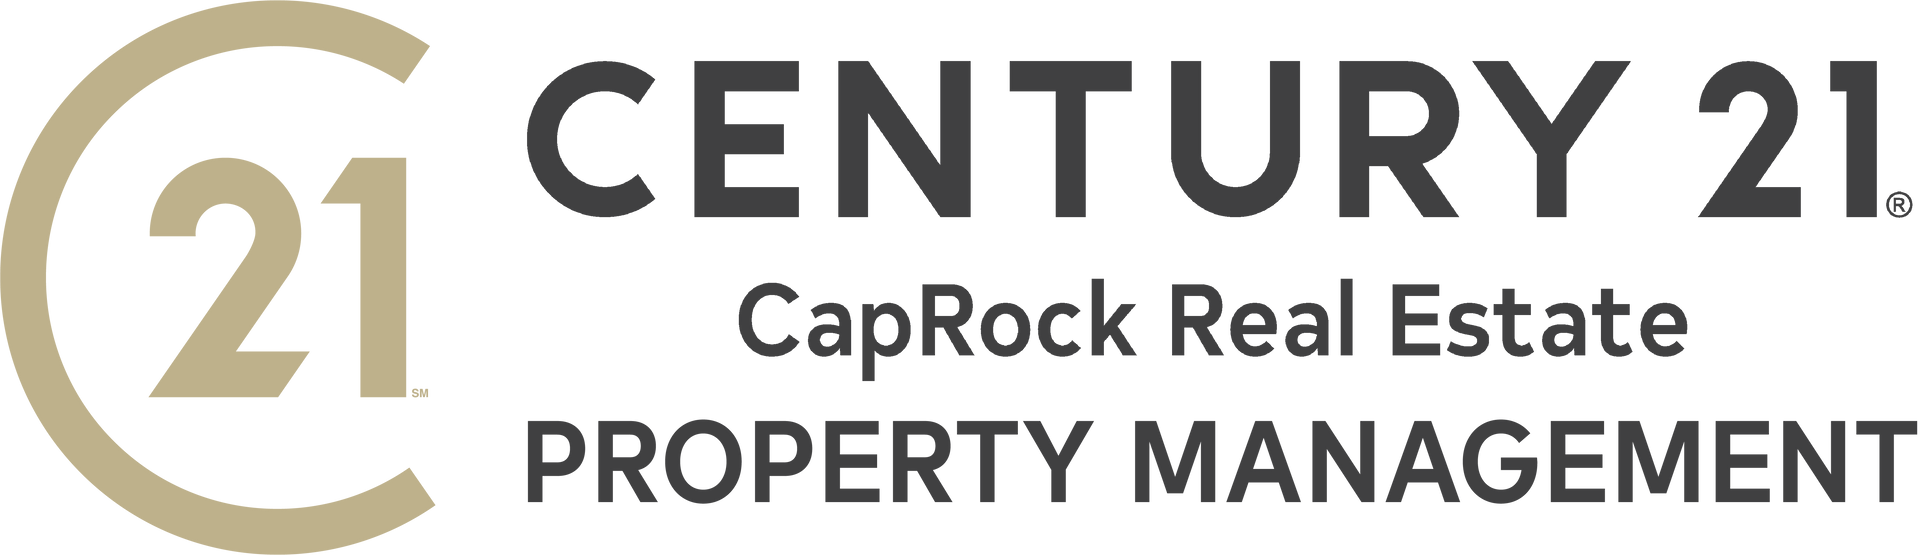 the logo for century 21 caprock real estate property management